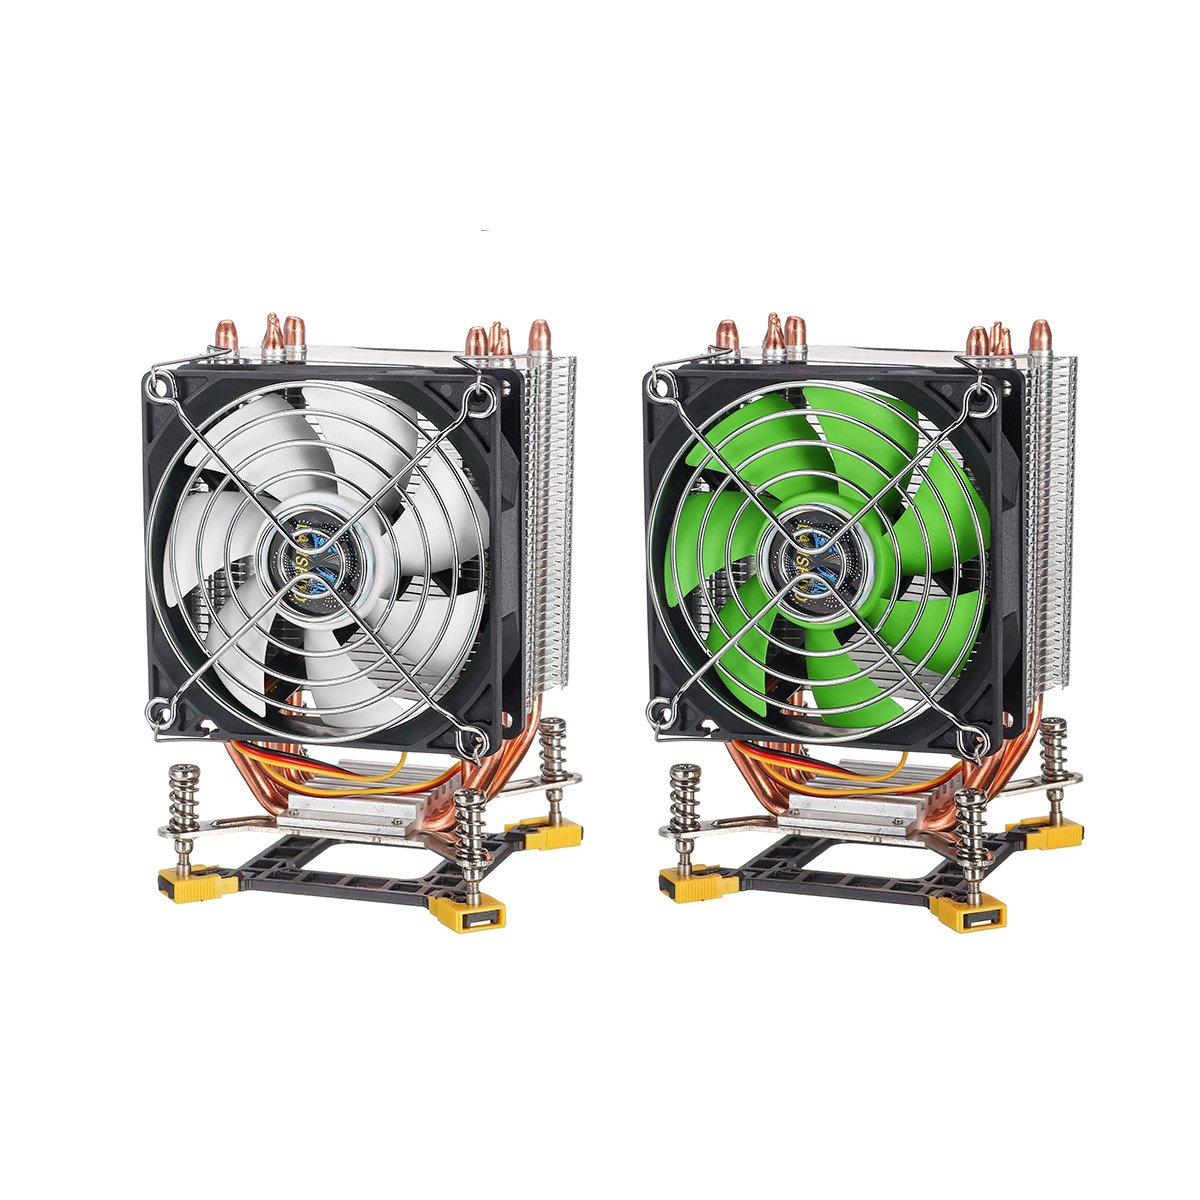 3 Pin 90cm 4 Heat Pipes Cooler Cooling Fan Heatsink for 115X 1366 Motherboard 2